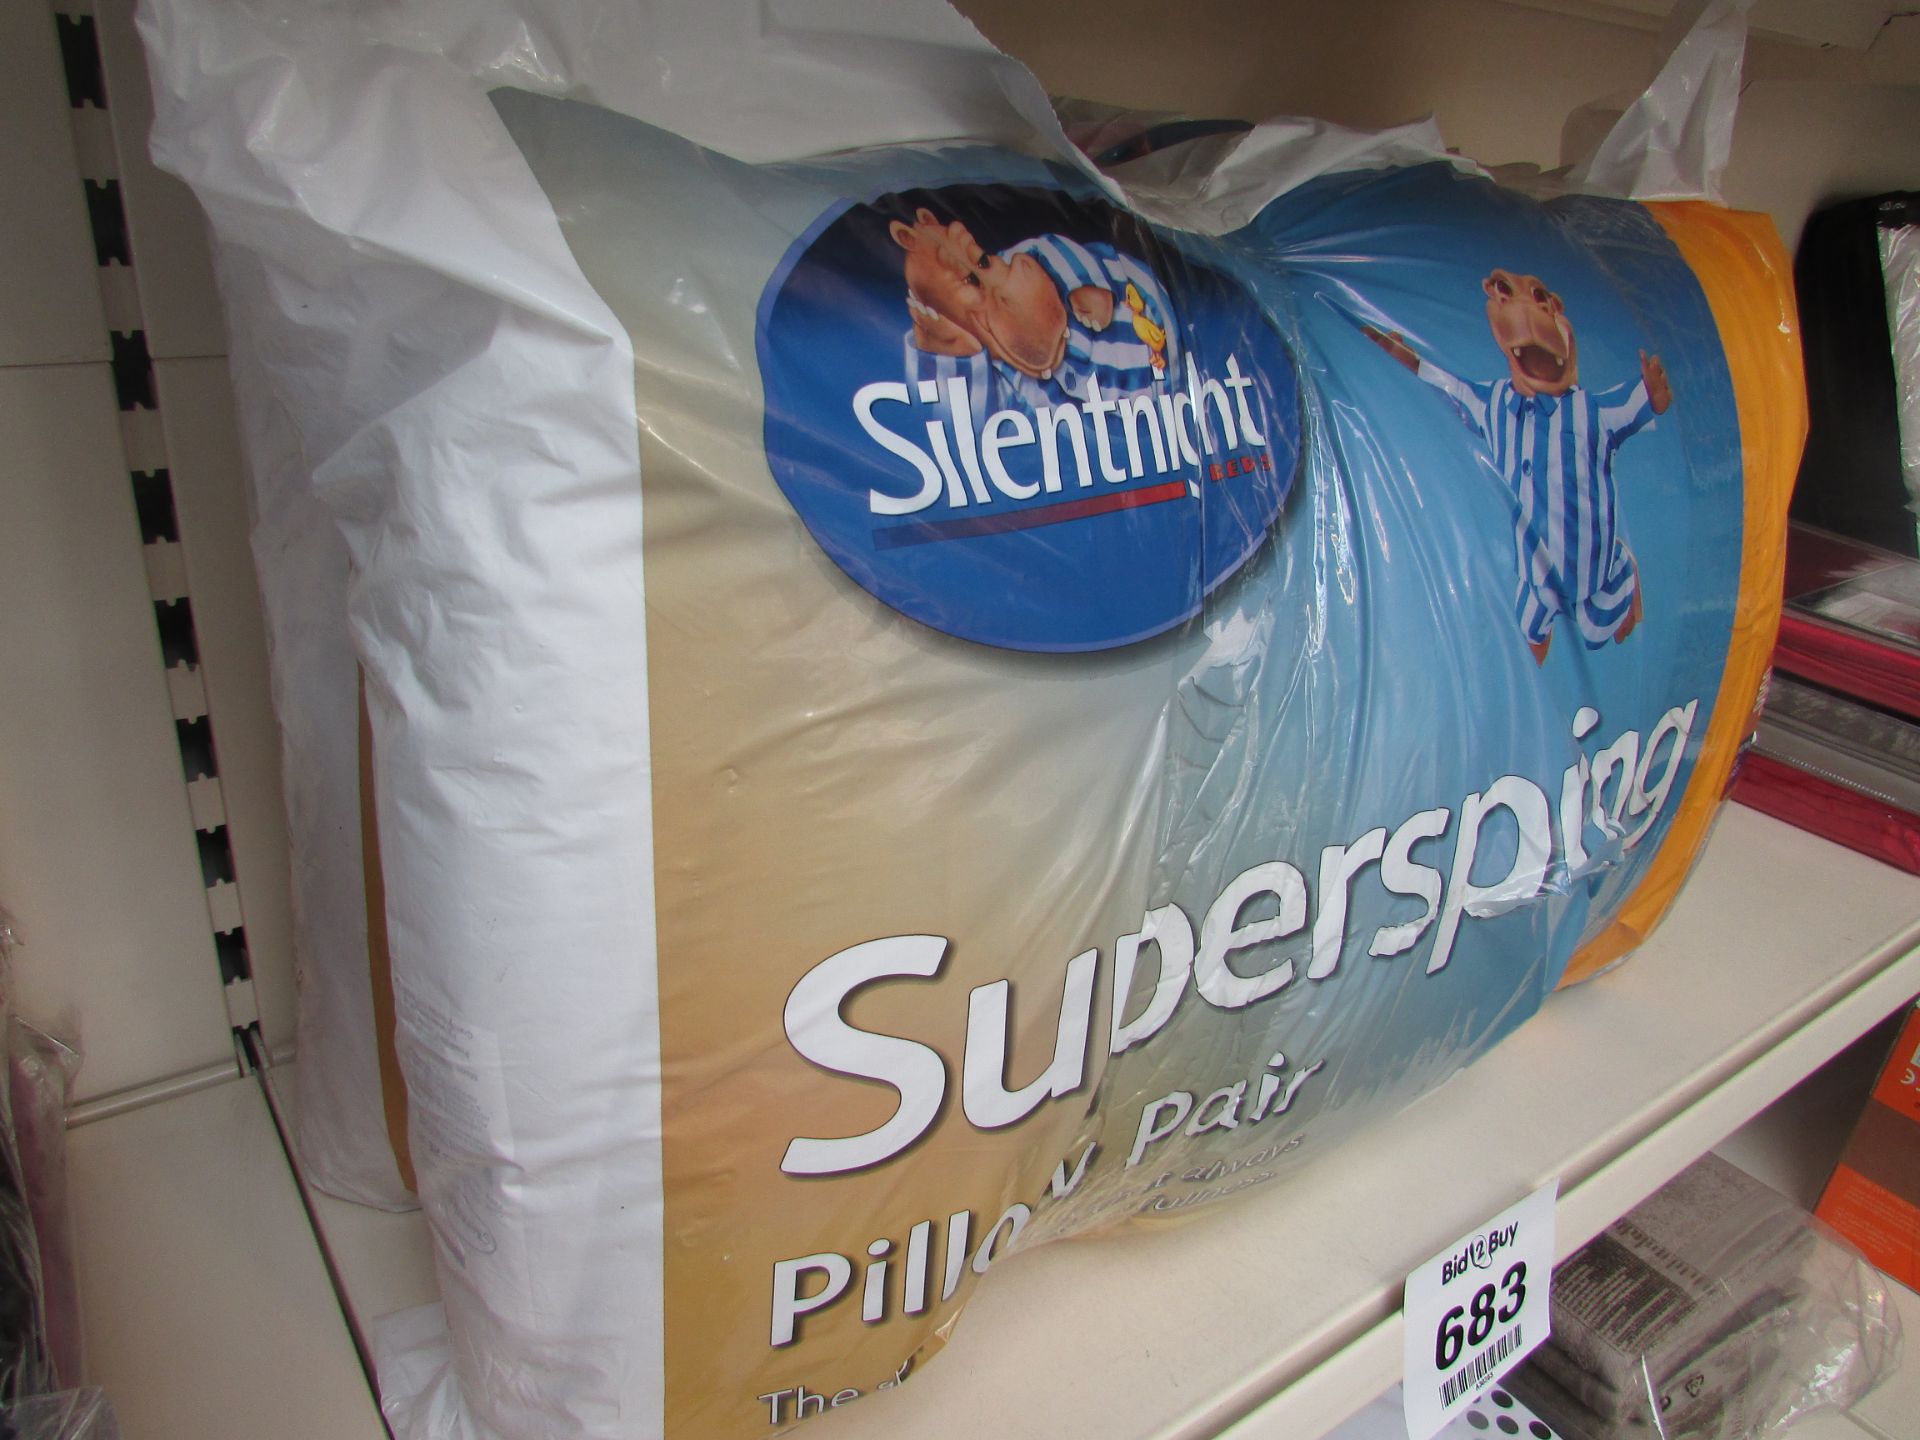 2 x 2 Pack of Silentnight Superspring Pillows